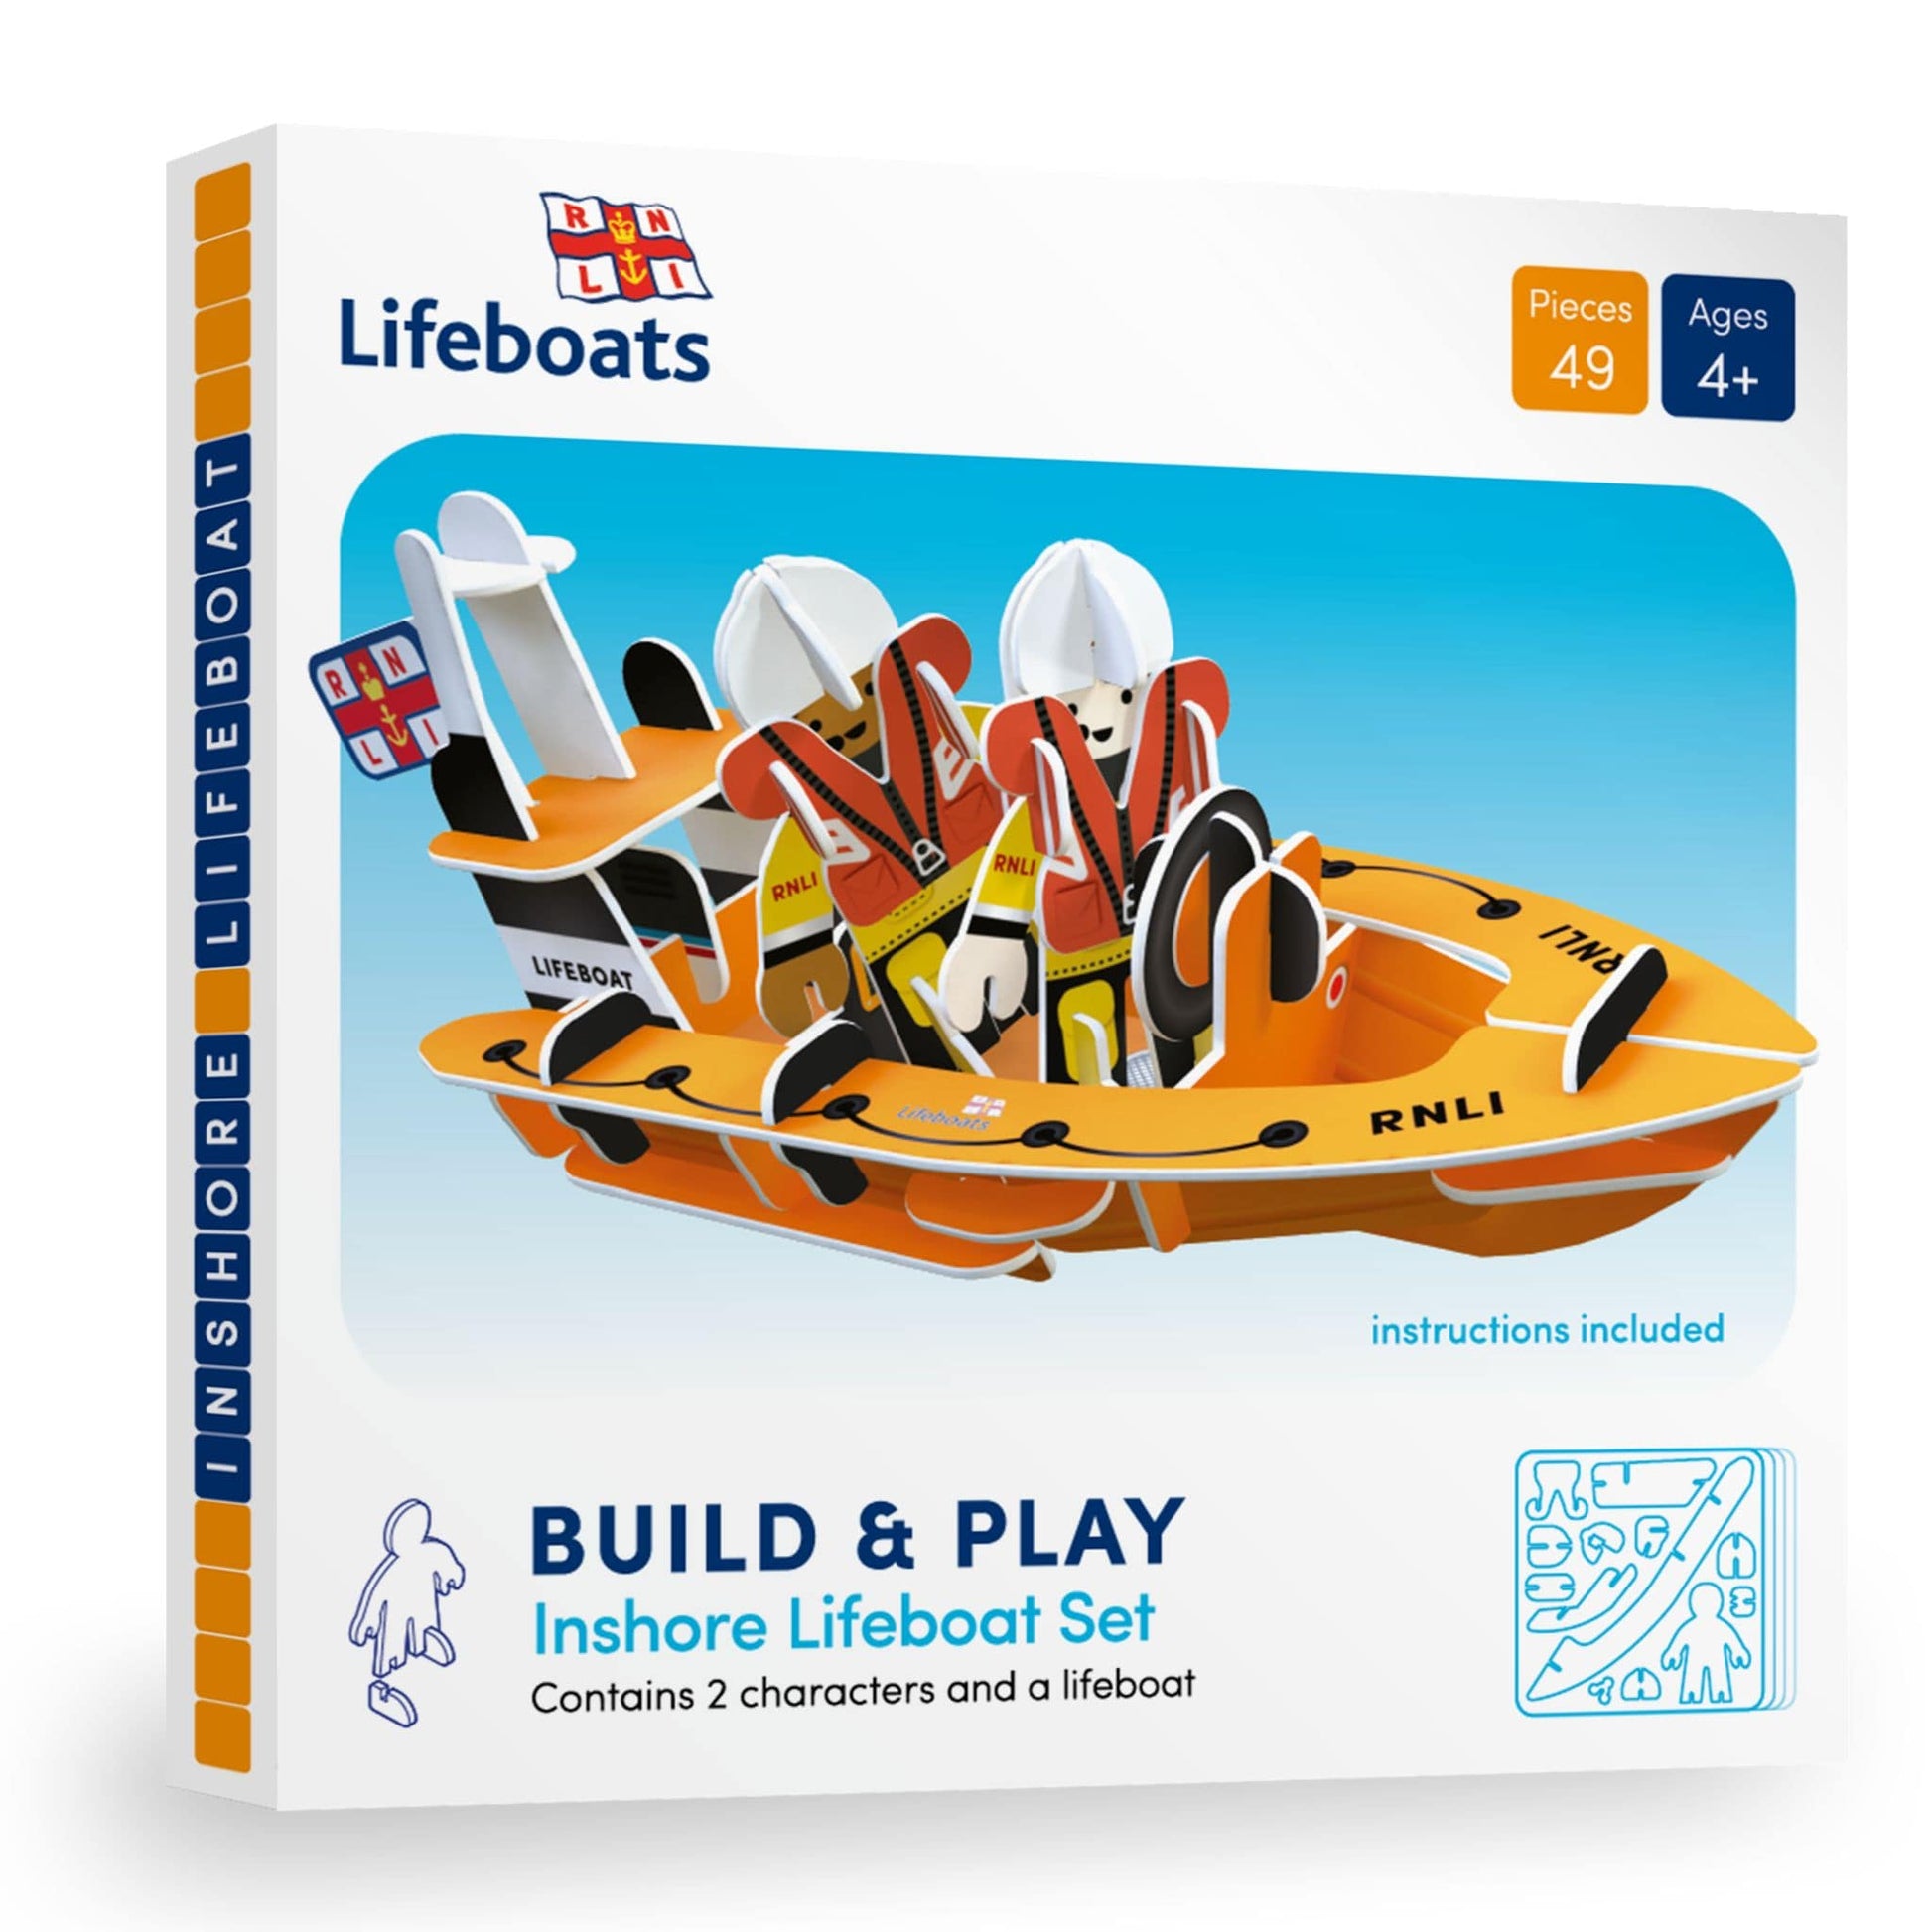 Playpress RNLI Lifeboat - eco-friendly toy